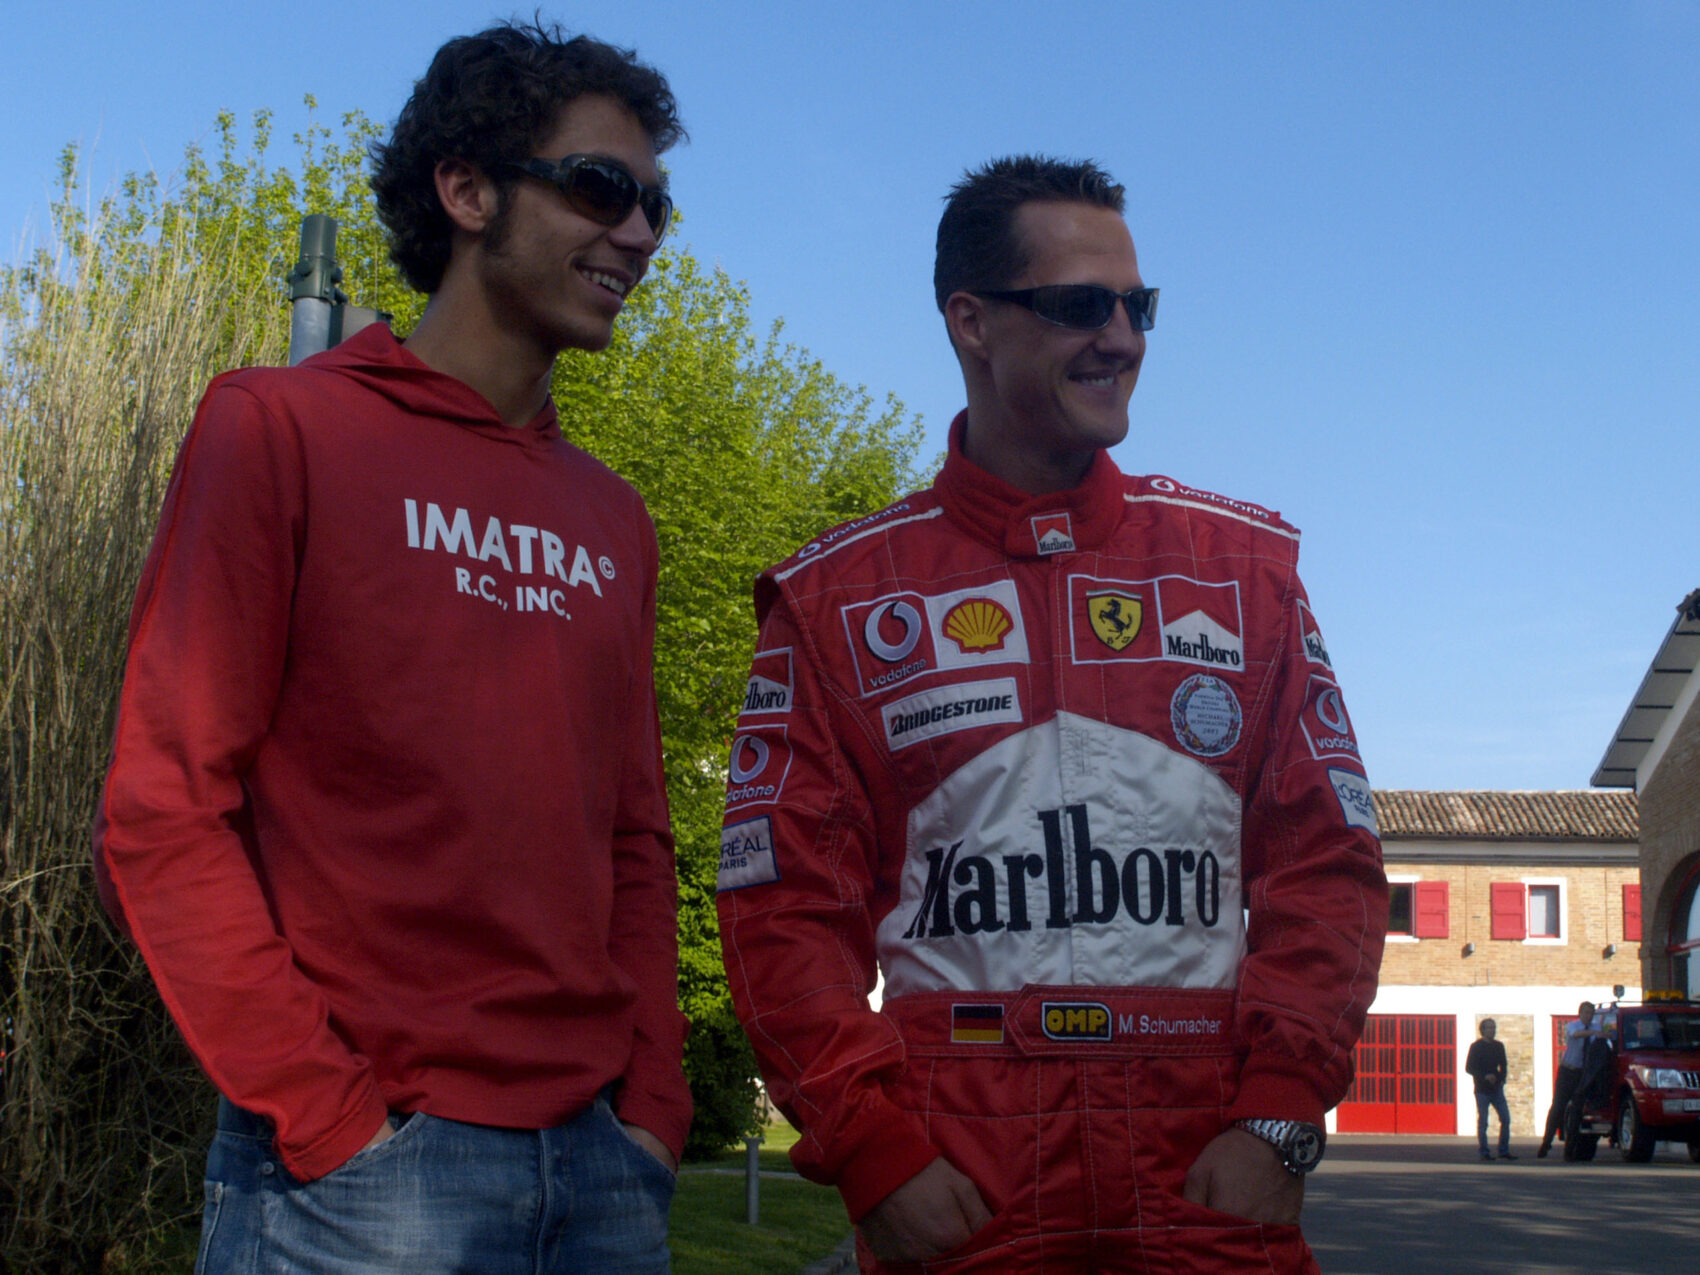 Valentino Rossi, Michael Schumacher, Ferrari